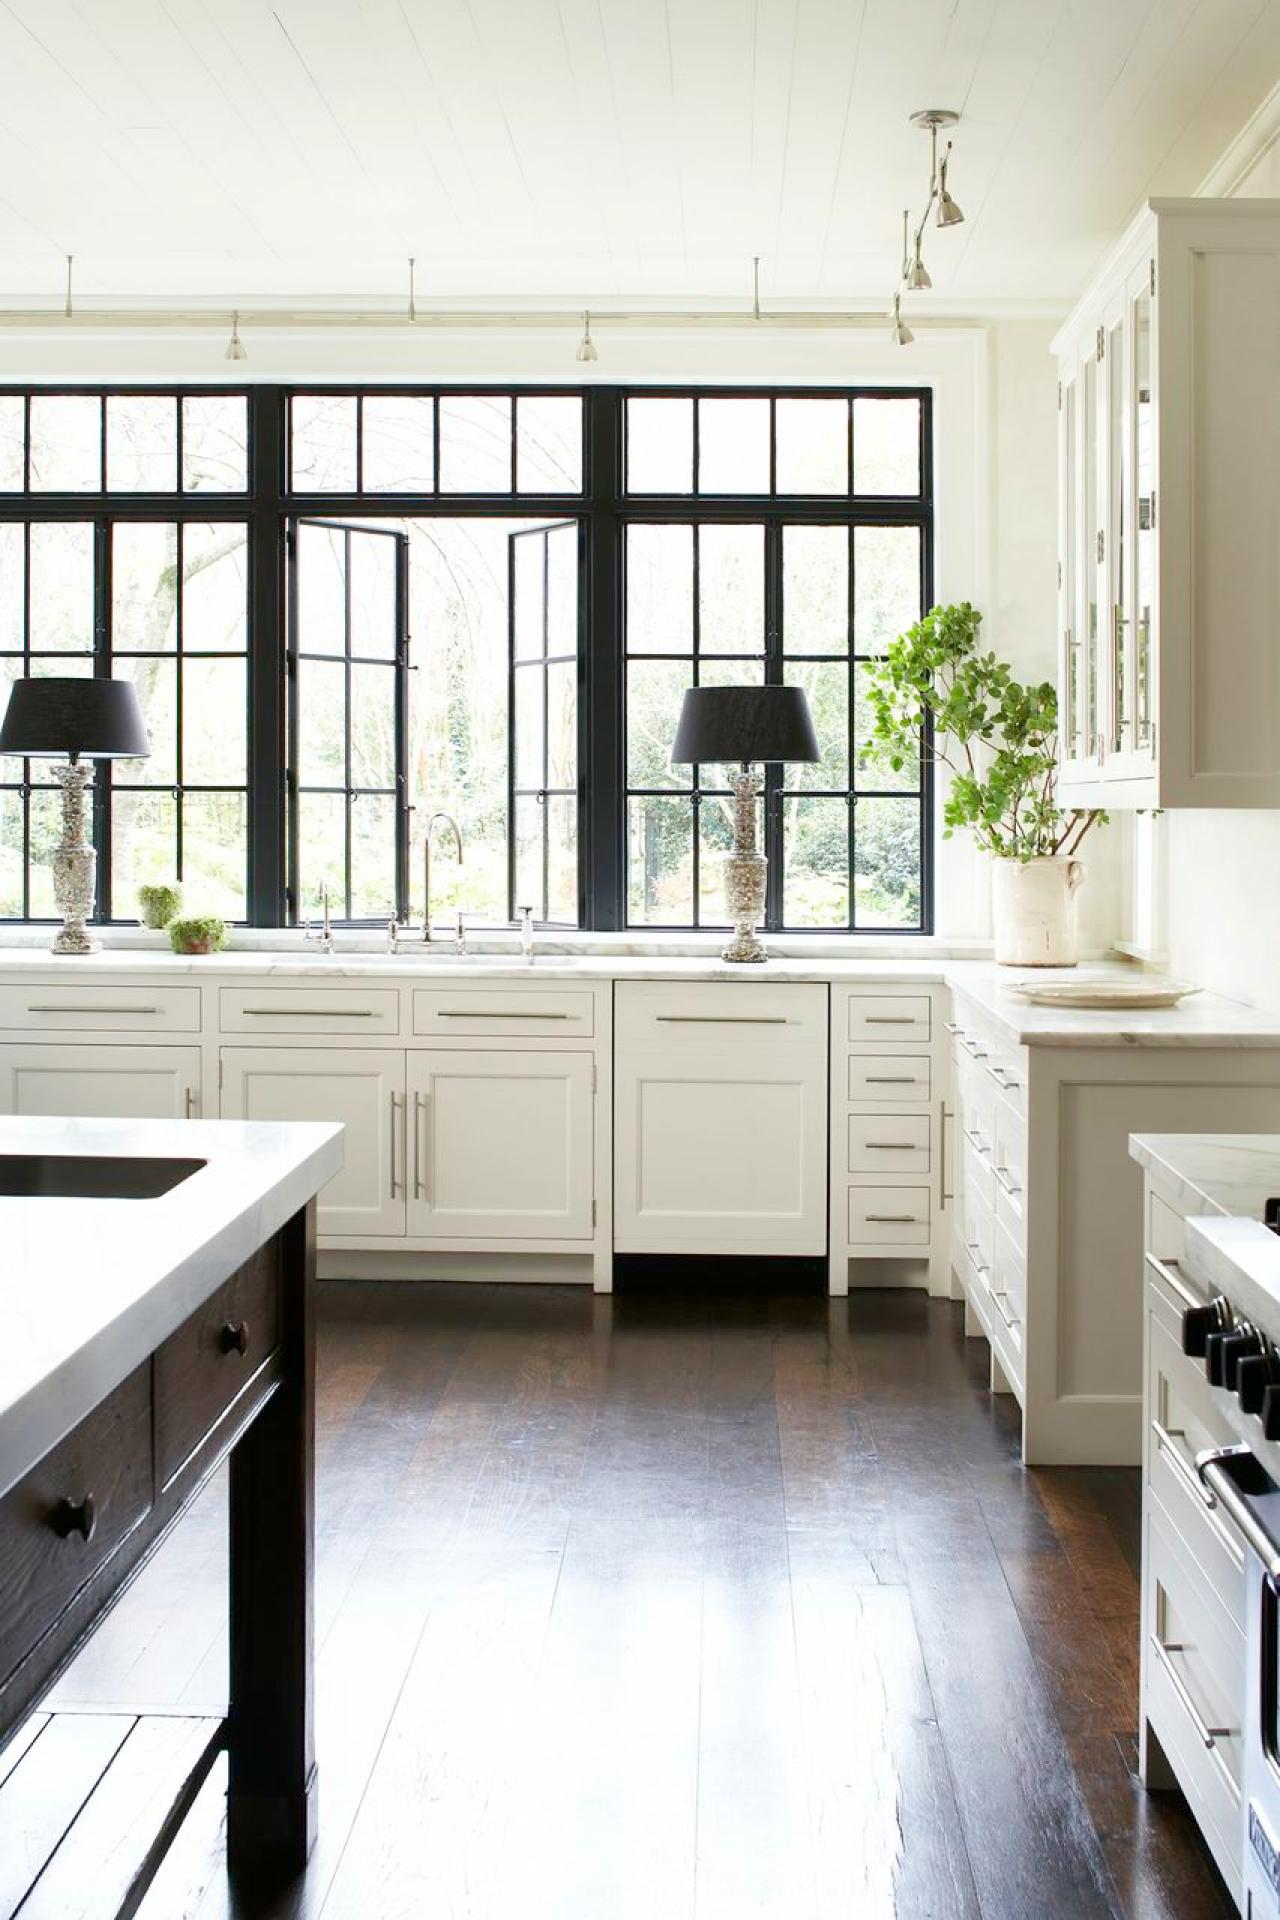 Classic Black Paned Windows in Gorgeous White Kitchen | HGTV